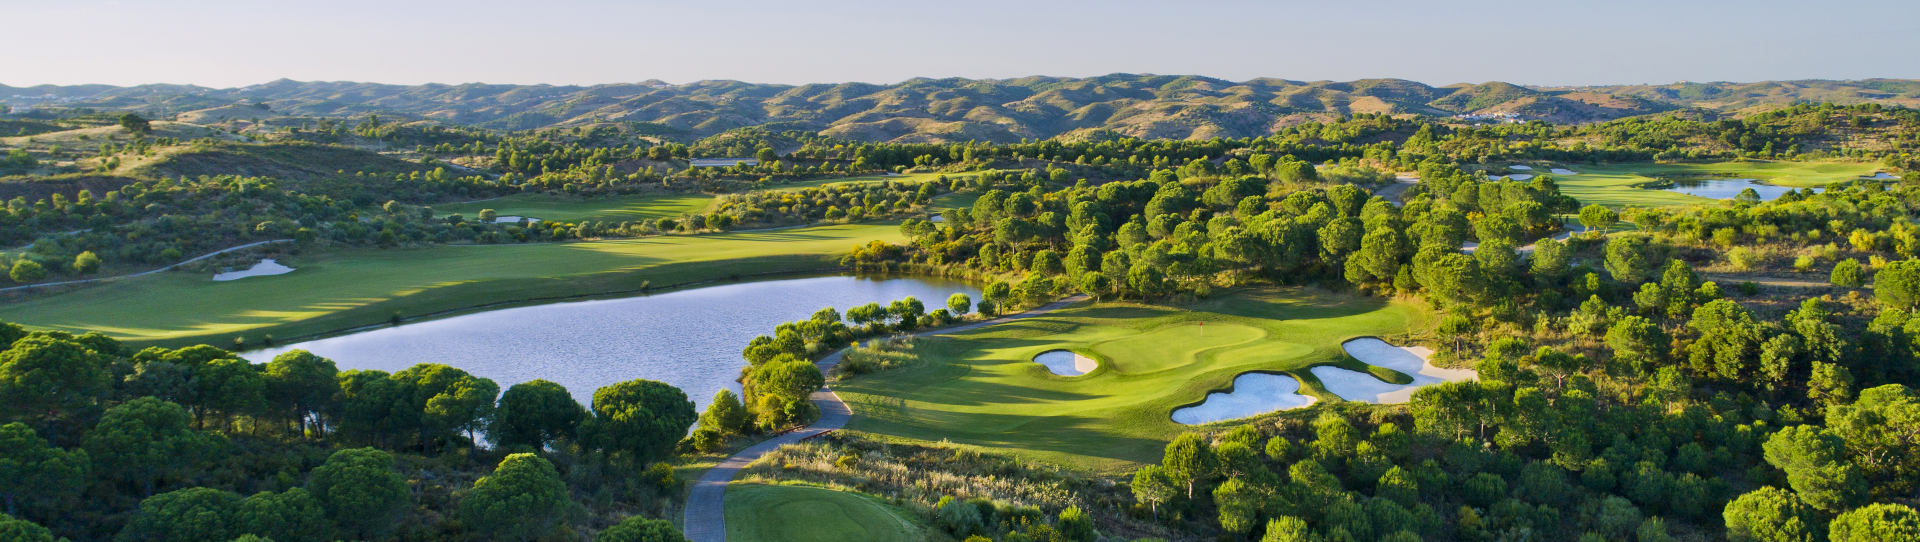 Portugal golf courses - Monte Rei North Golf Course - Photo 2